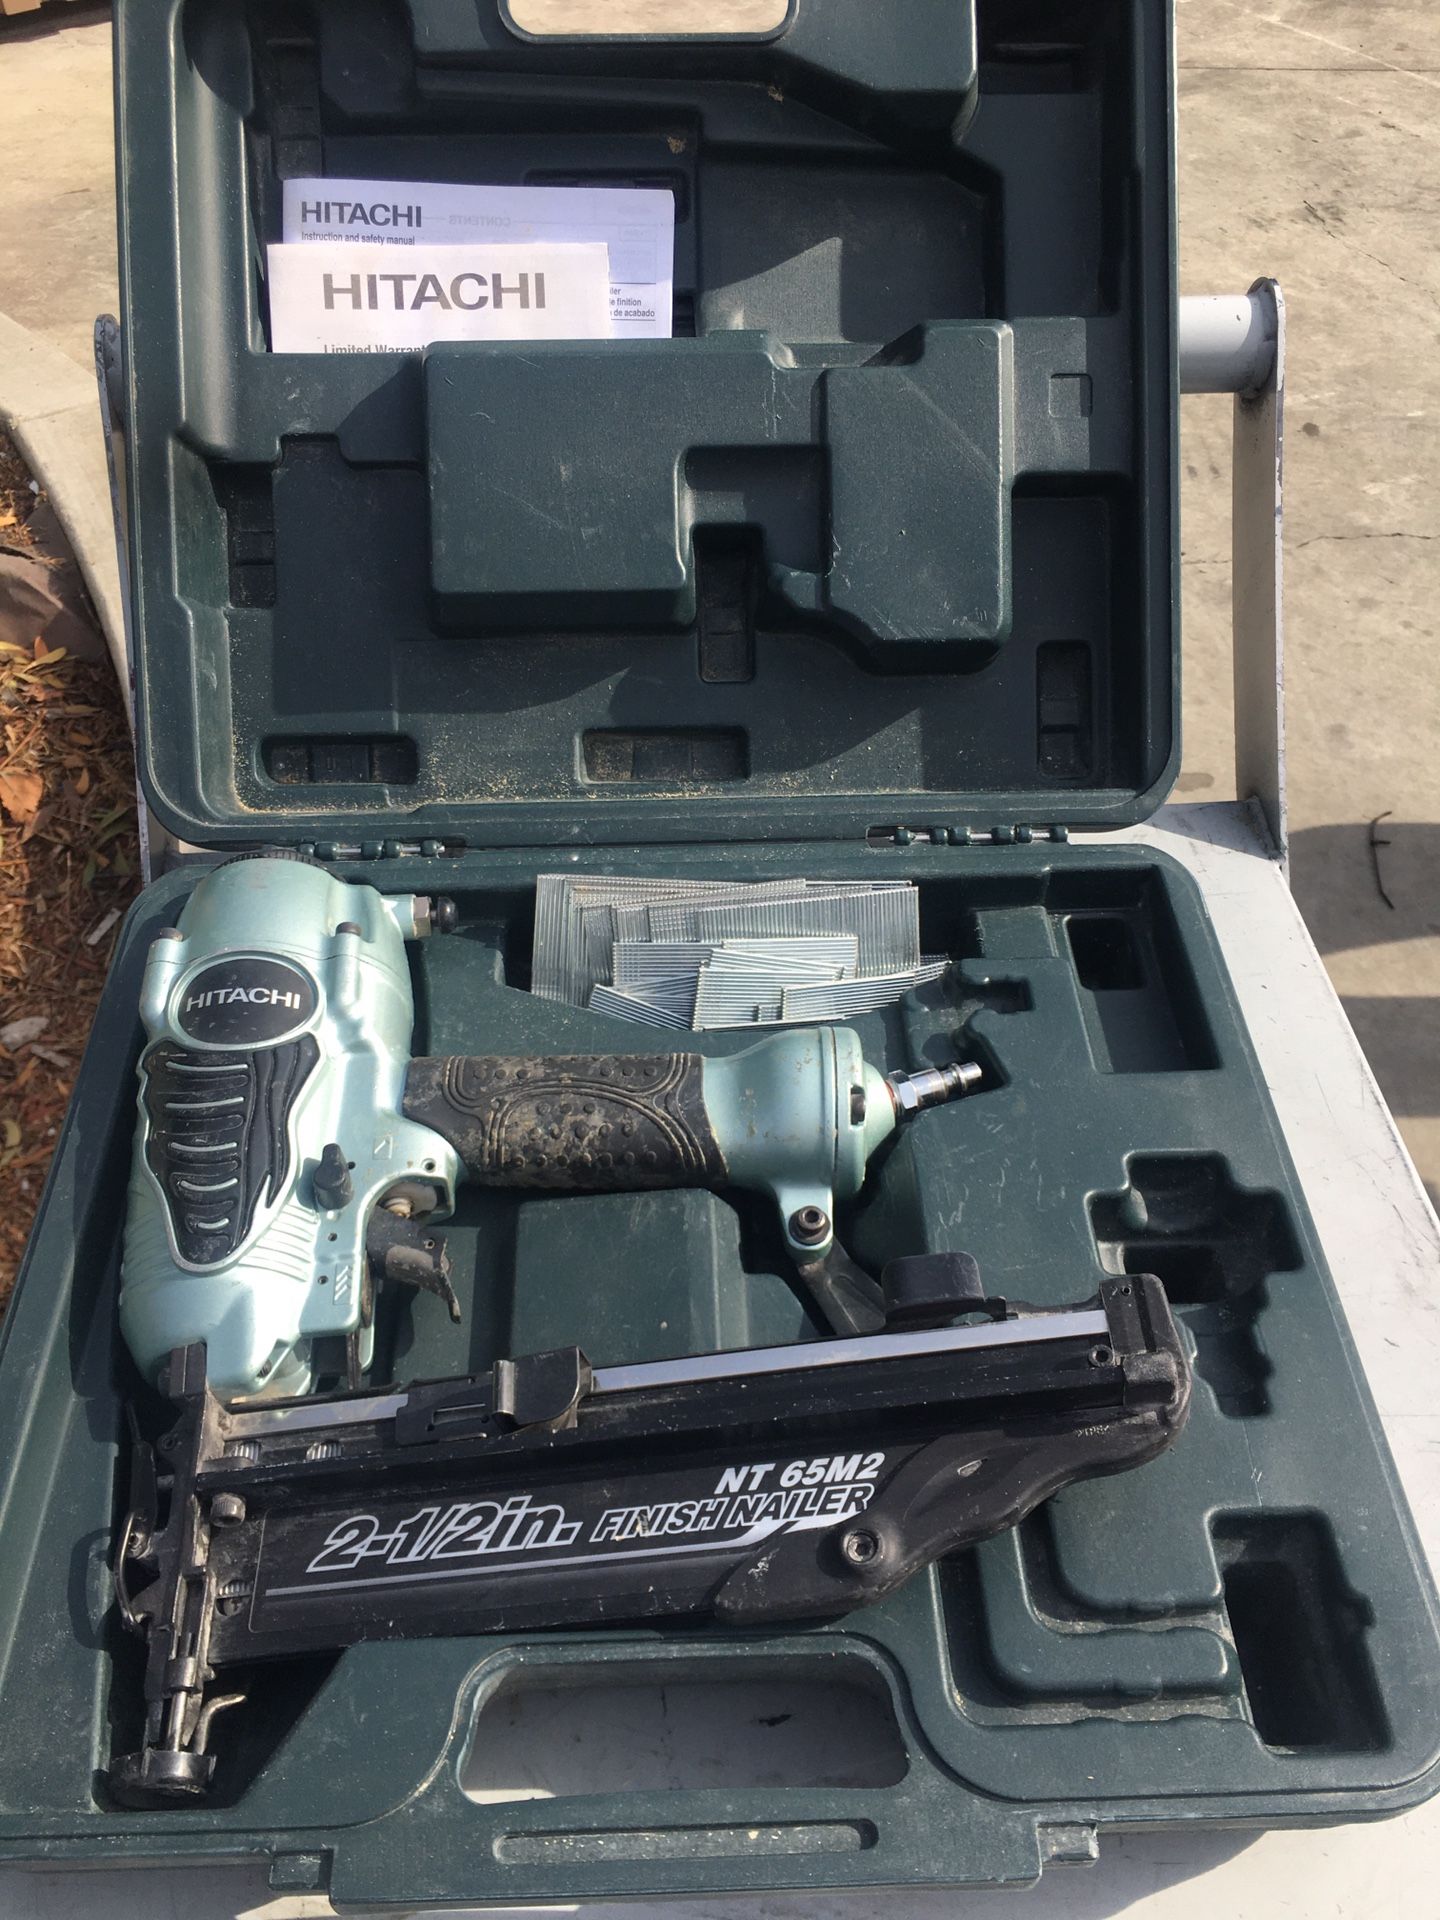 Hitachi 16g Finish Nailer